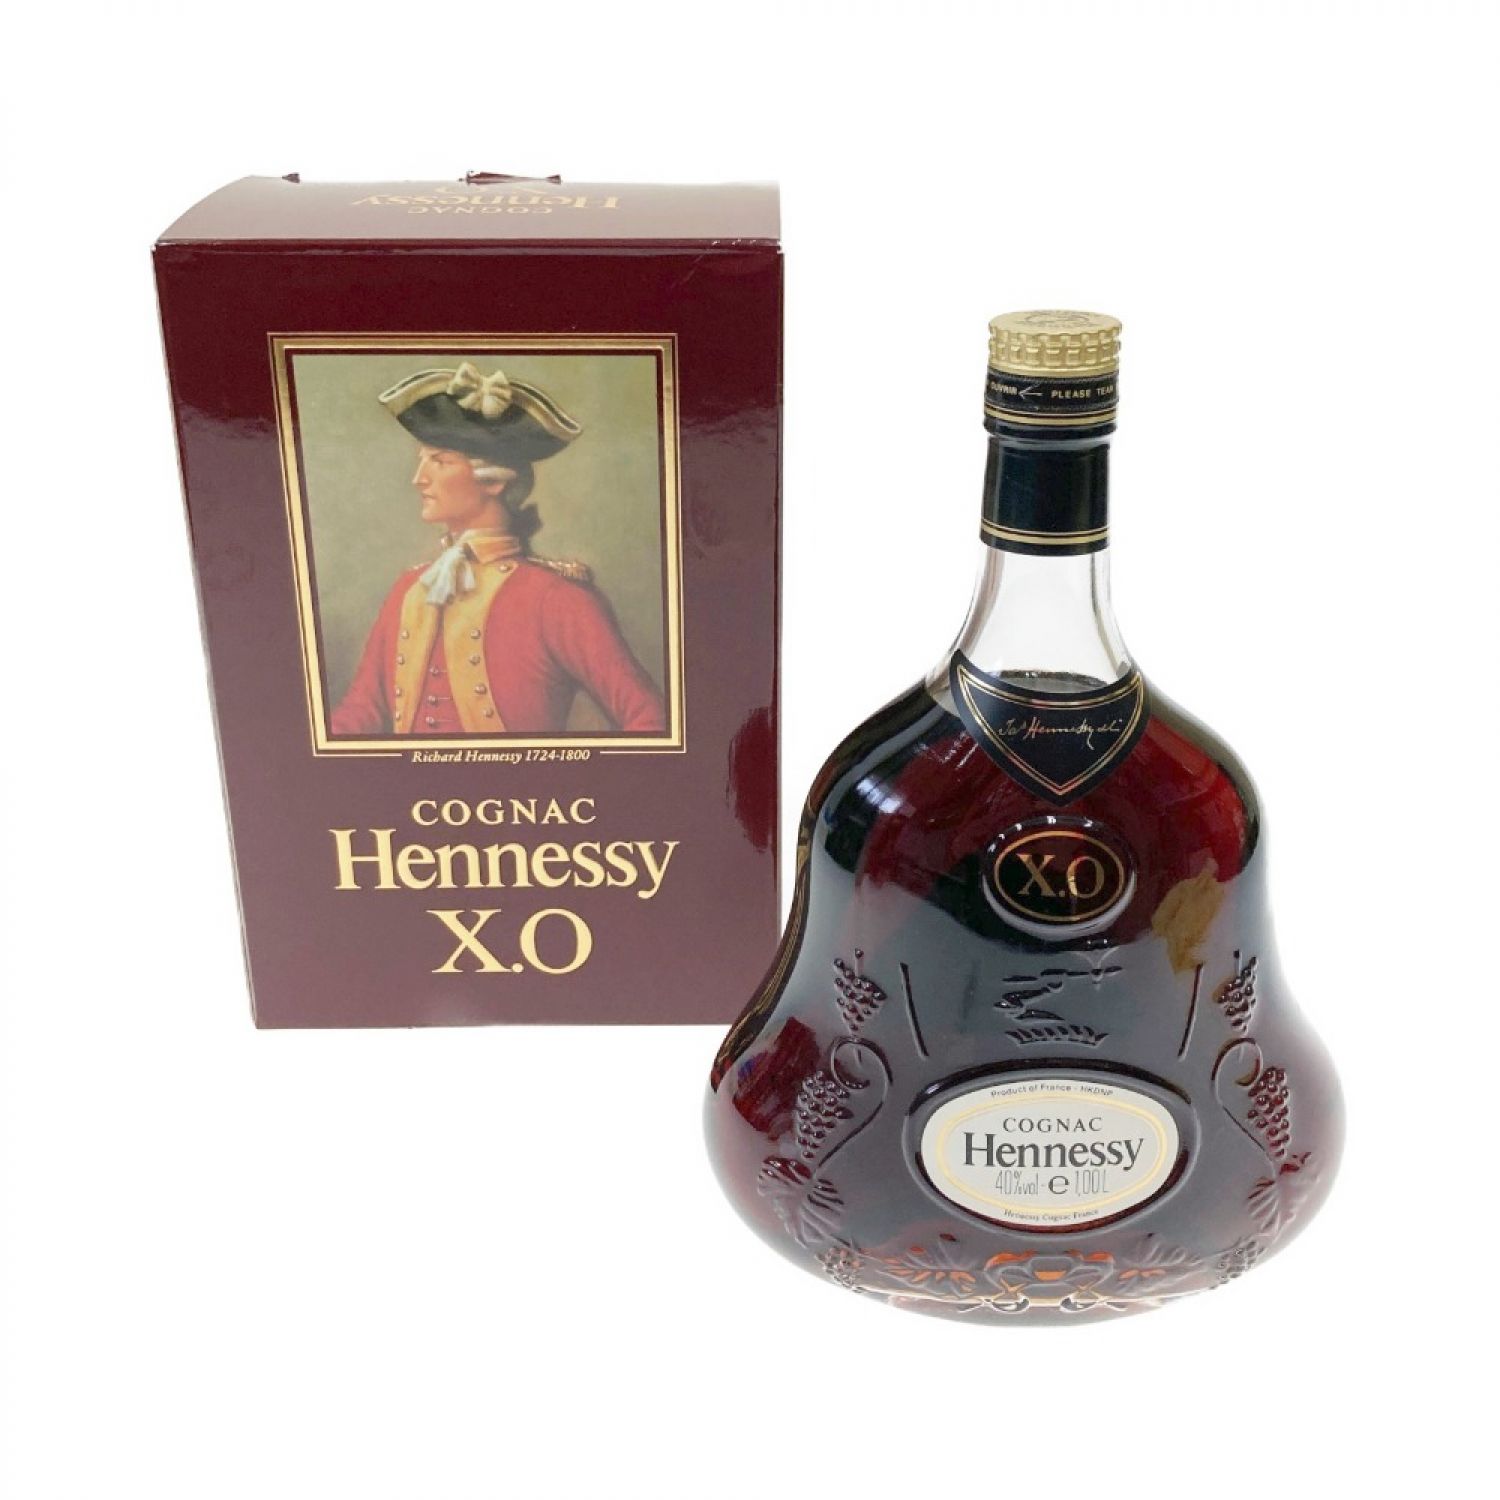 Hennessy ヘネシー コニャック xo 金キャップ 古酒 箱